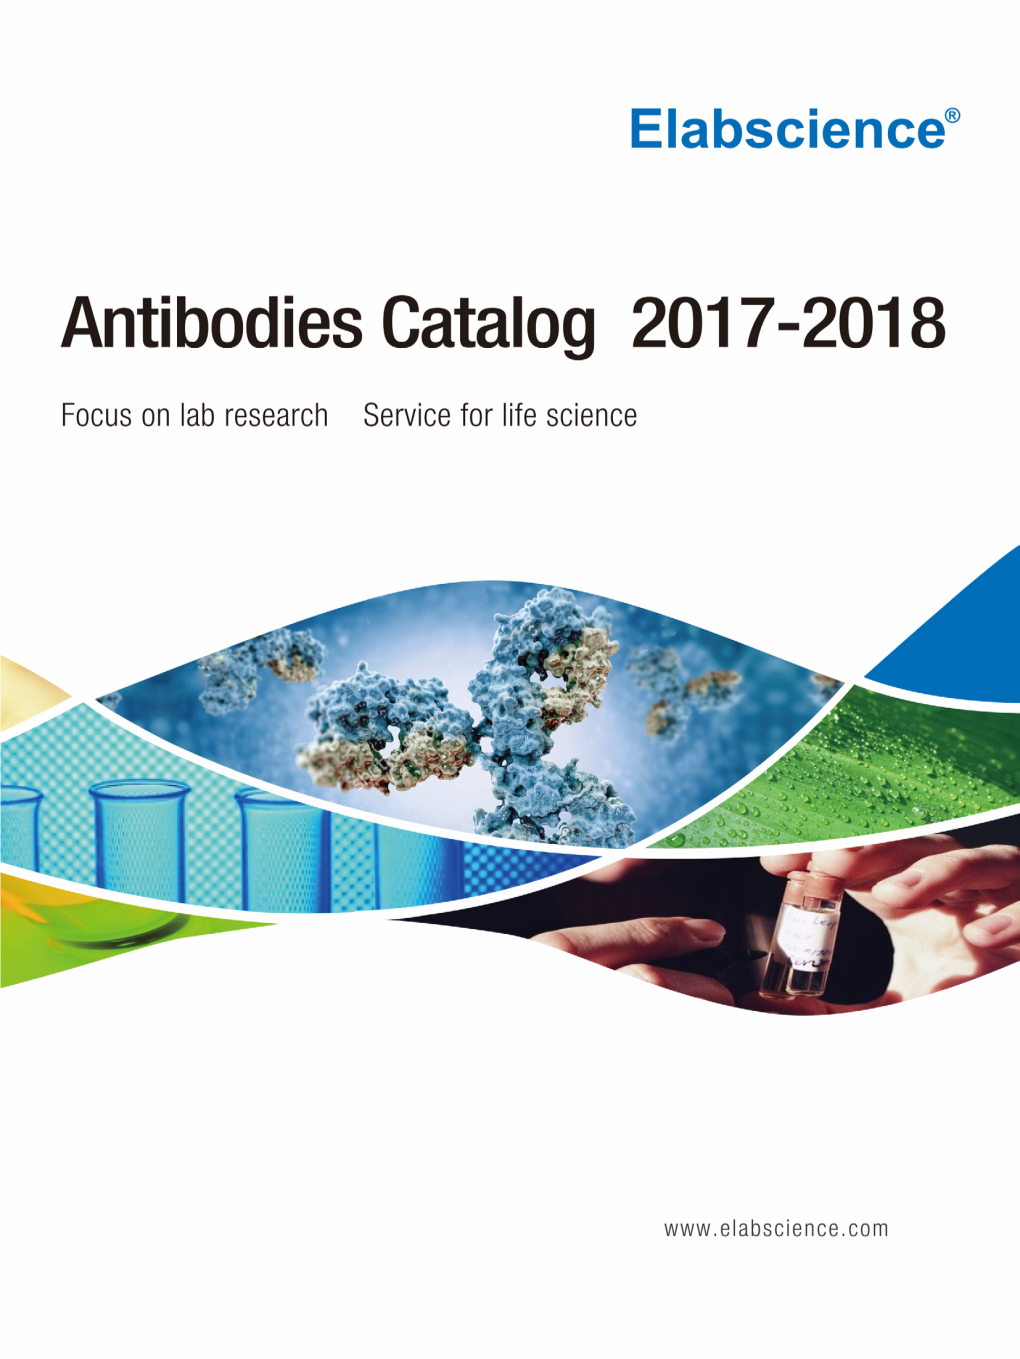 Elabscience--Antibody-Catalog.Pdf